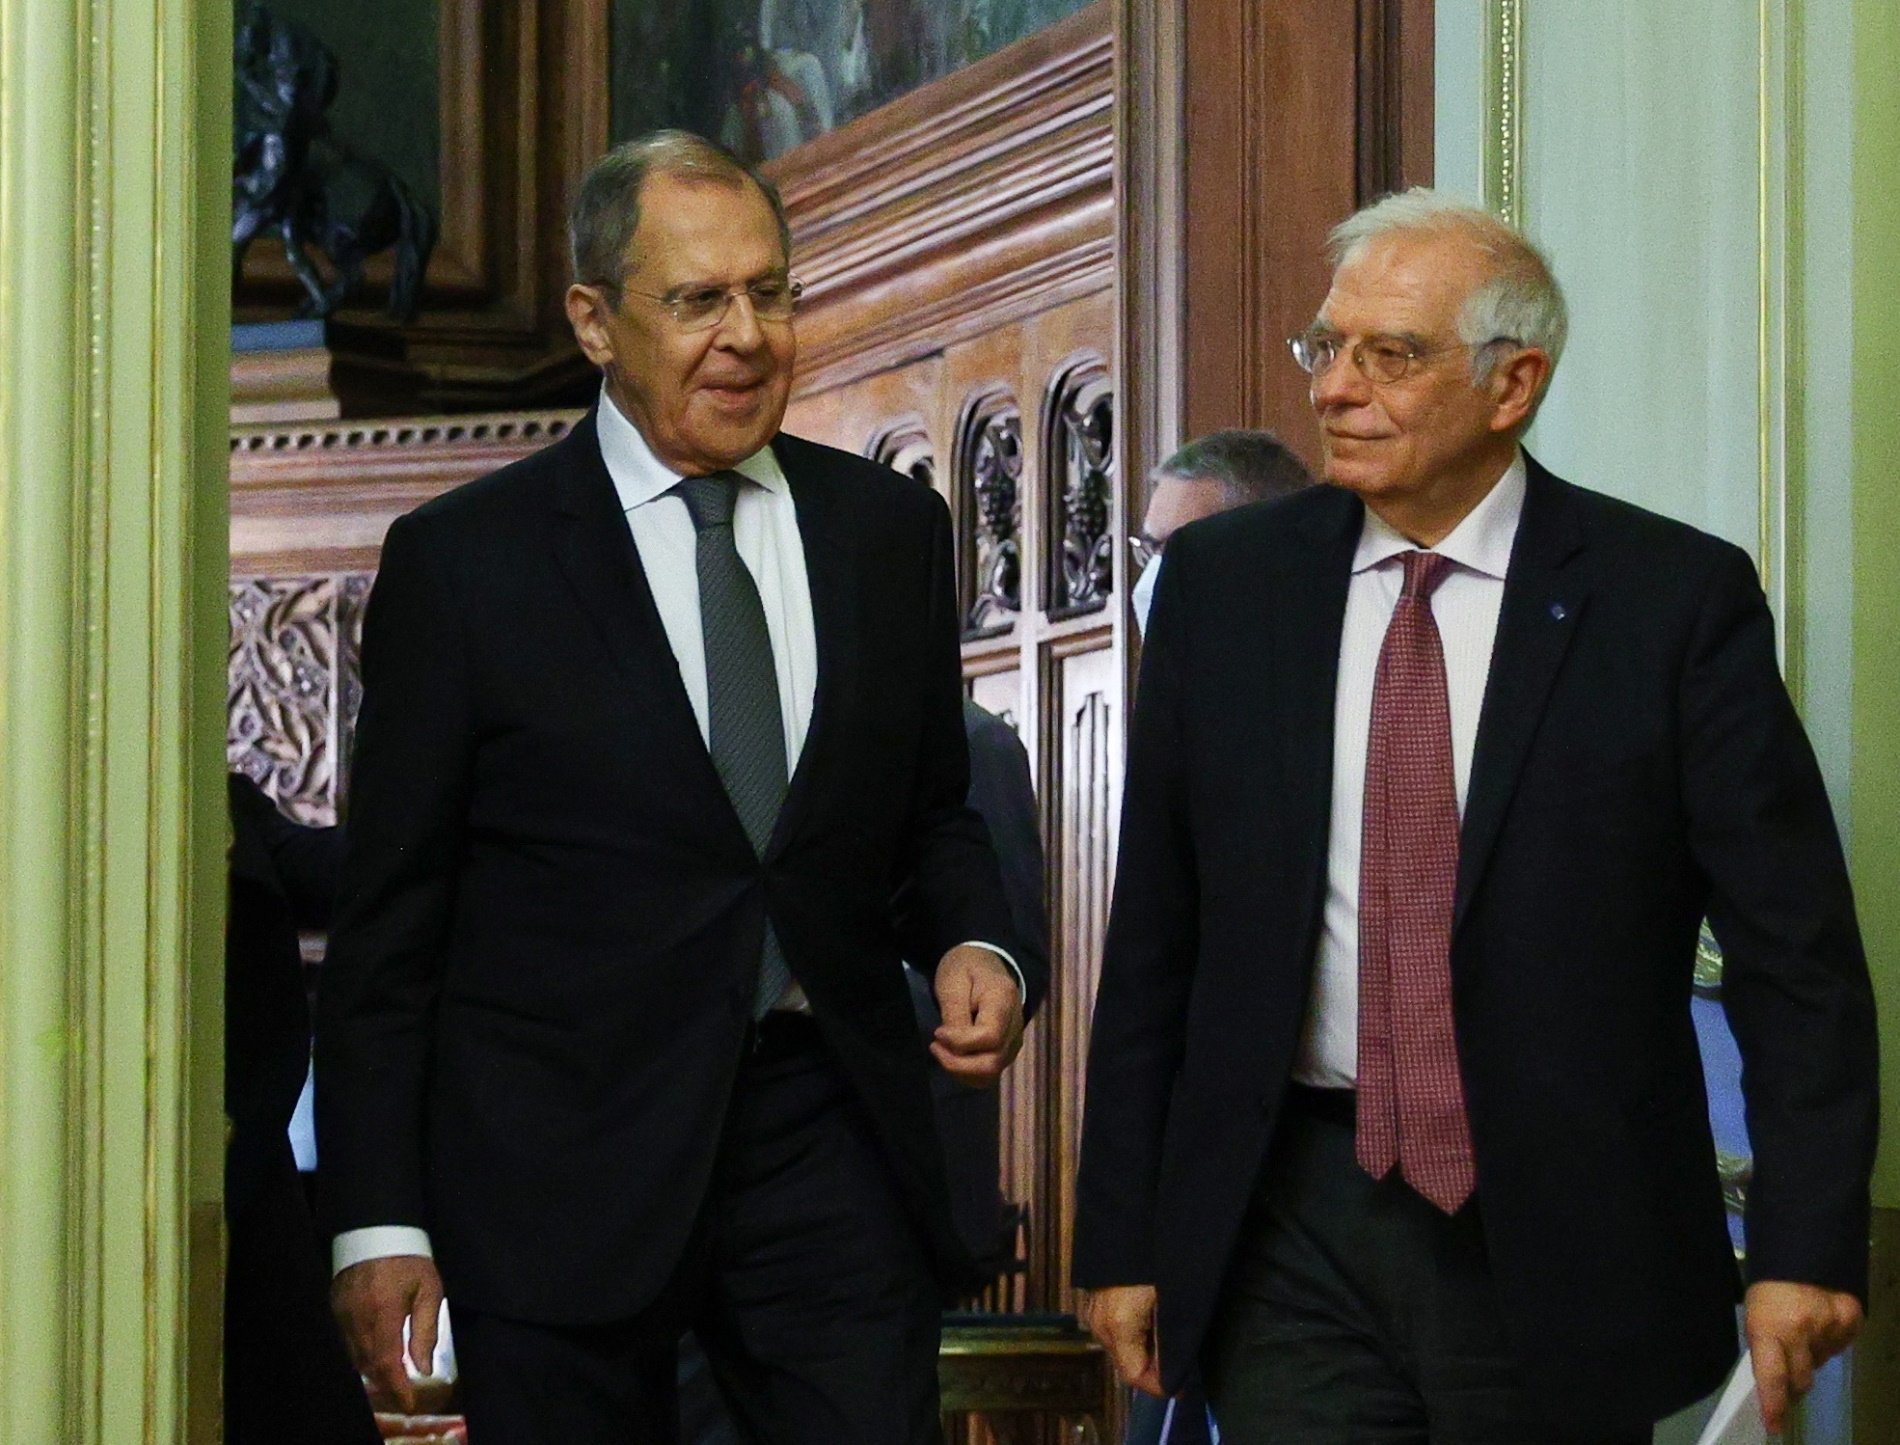 Se disparan las críticas a Borrell en la prensa europea: "Ha sido un monaguillo"